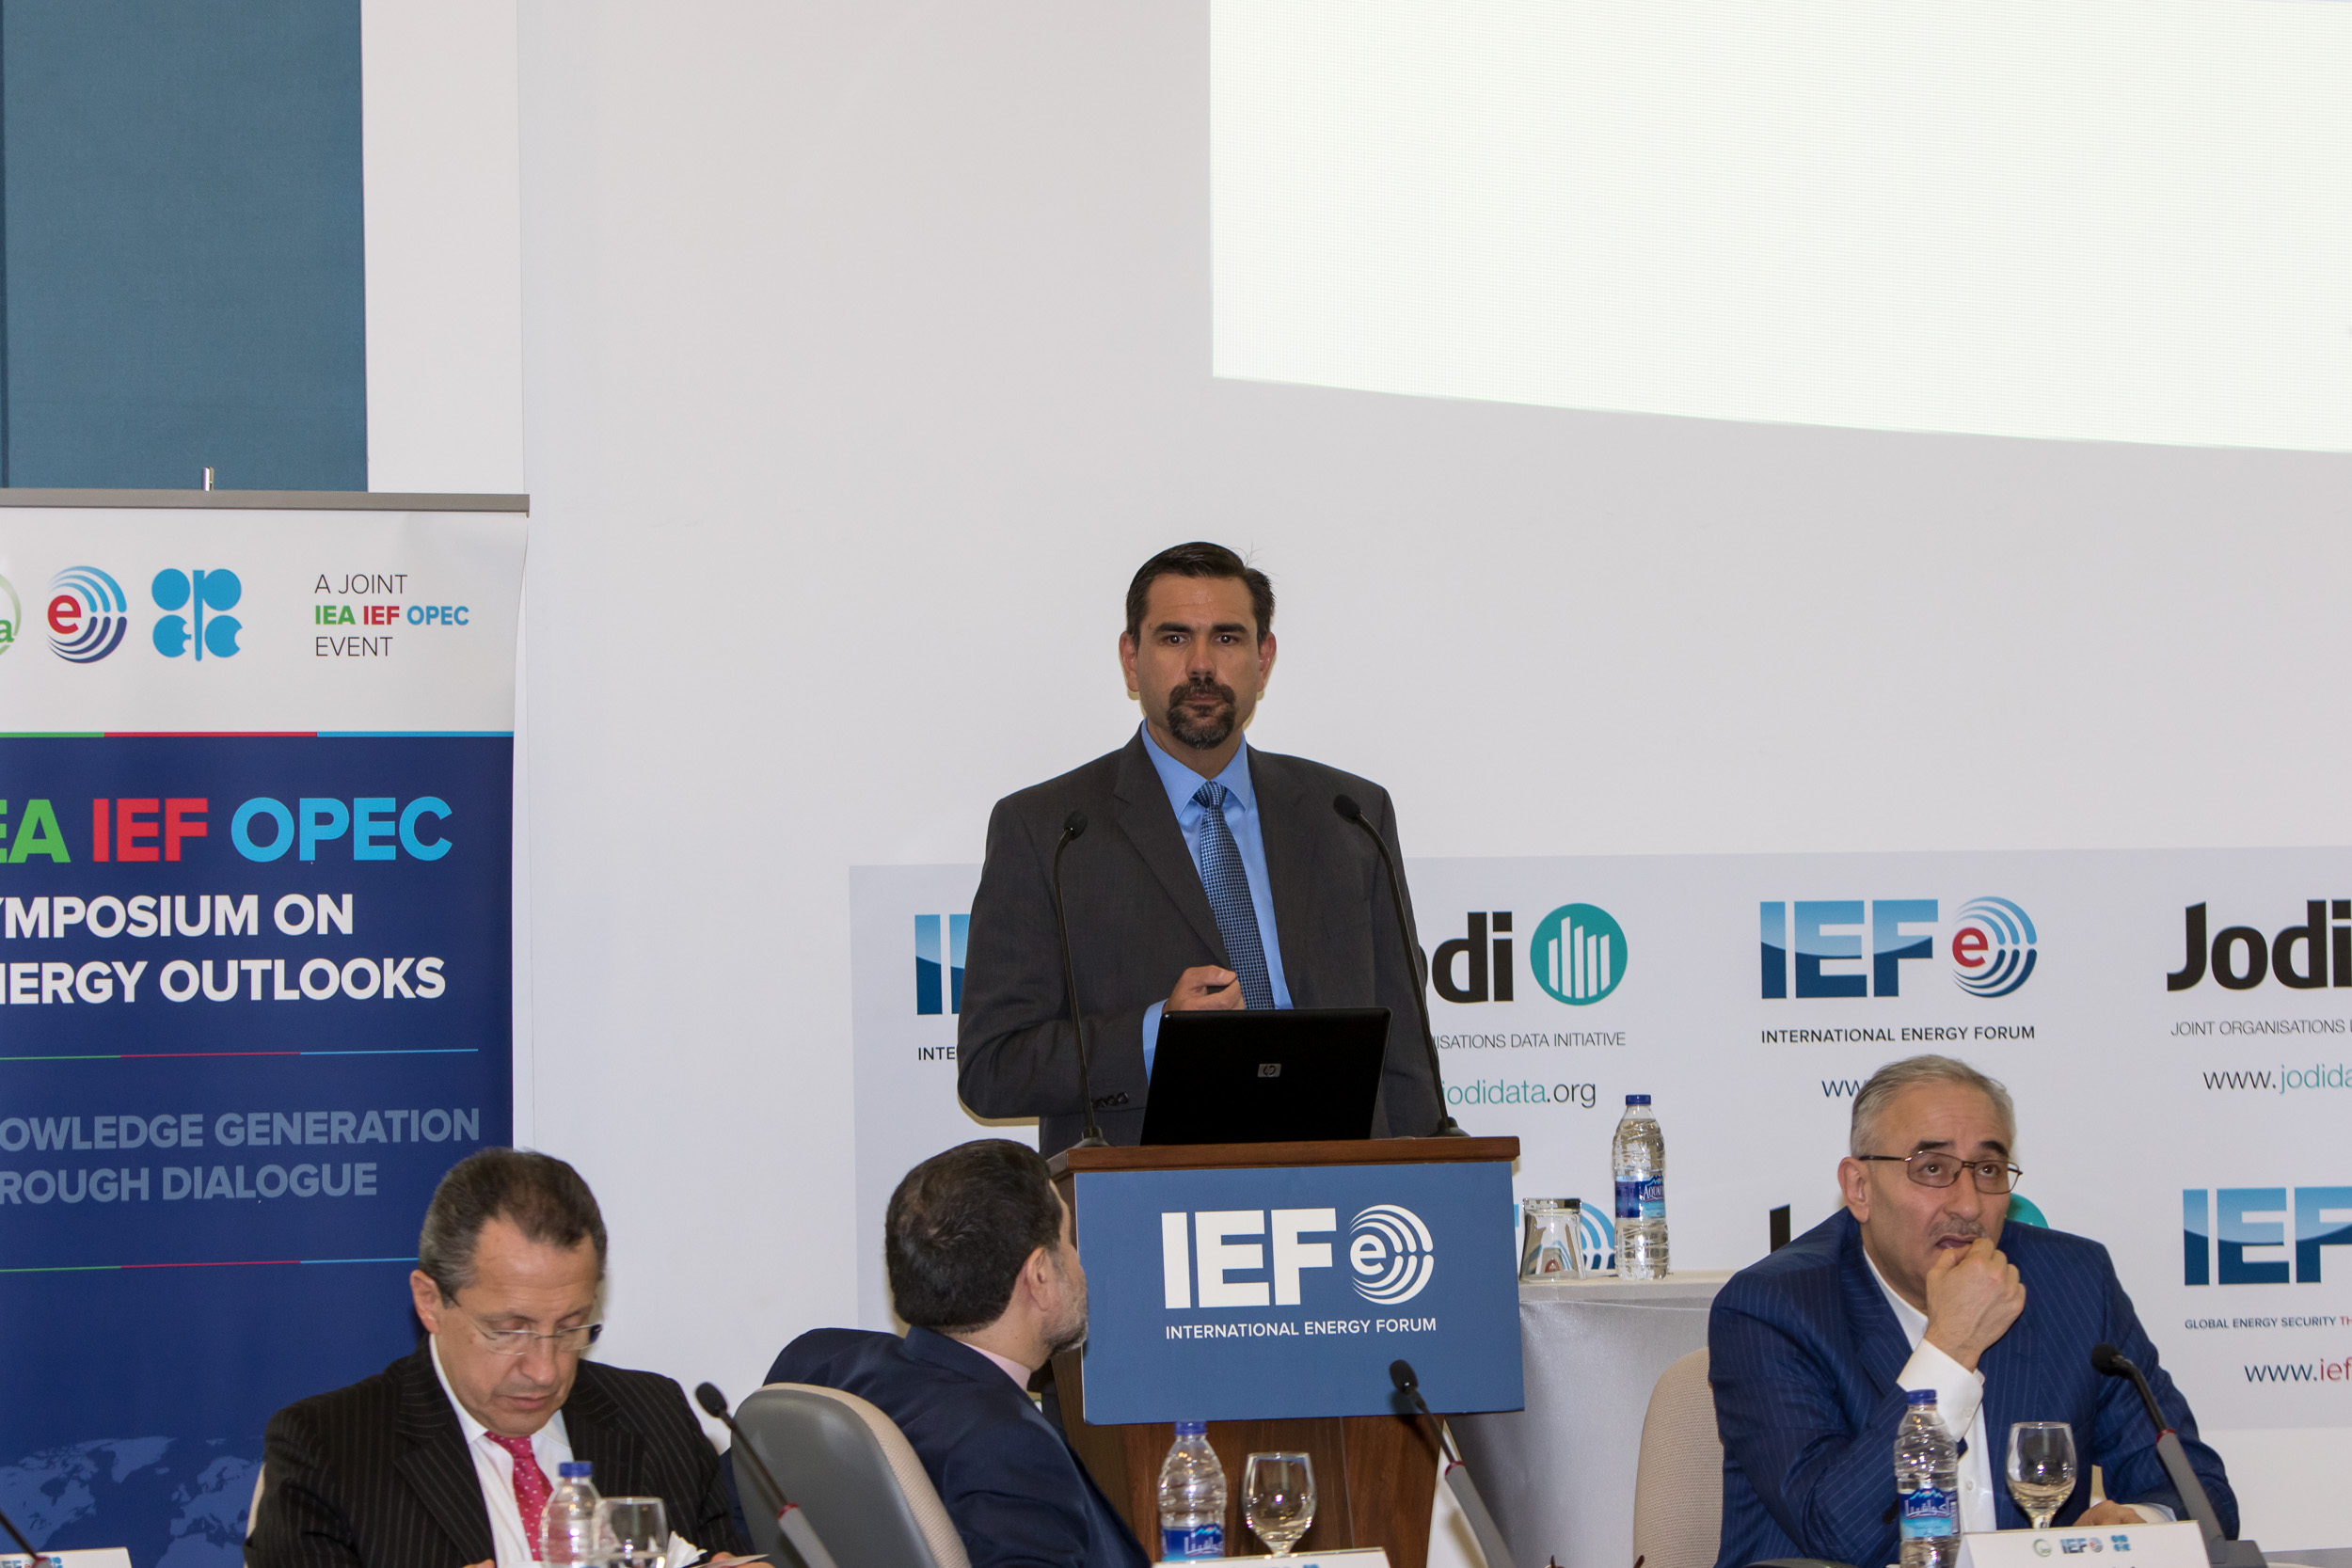 IEA IEF OPEC Symposium_21114